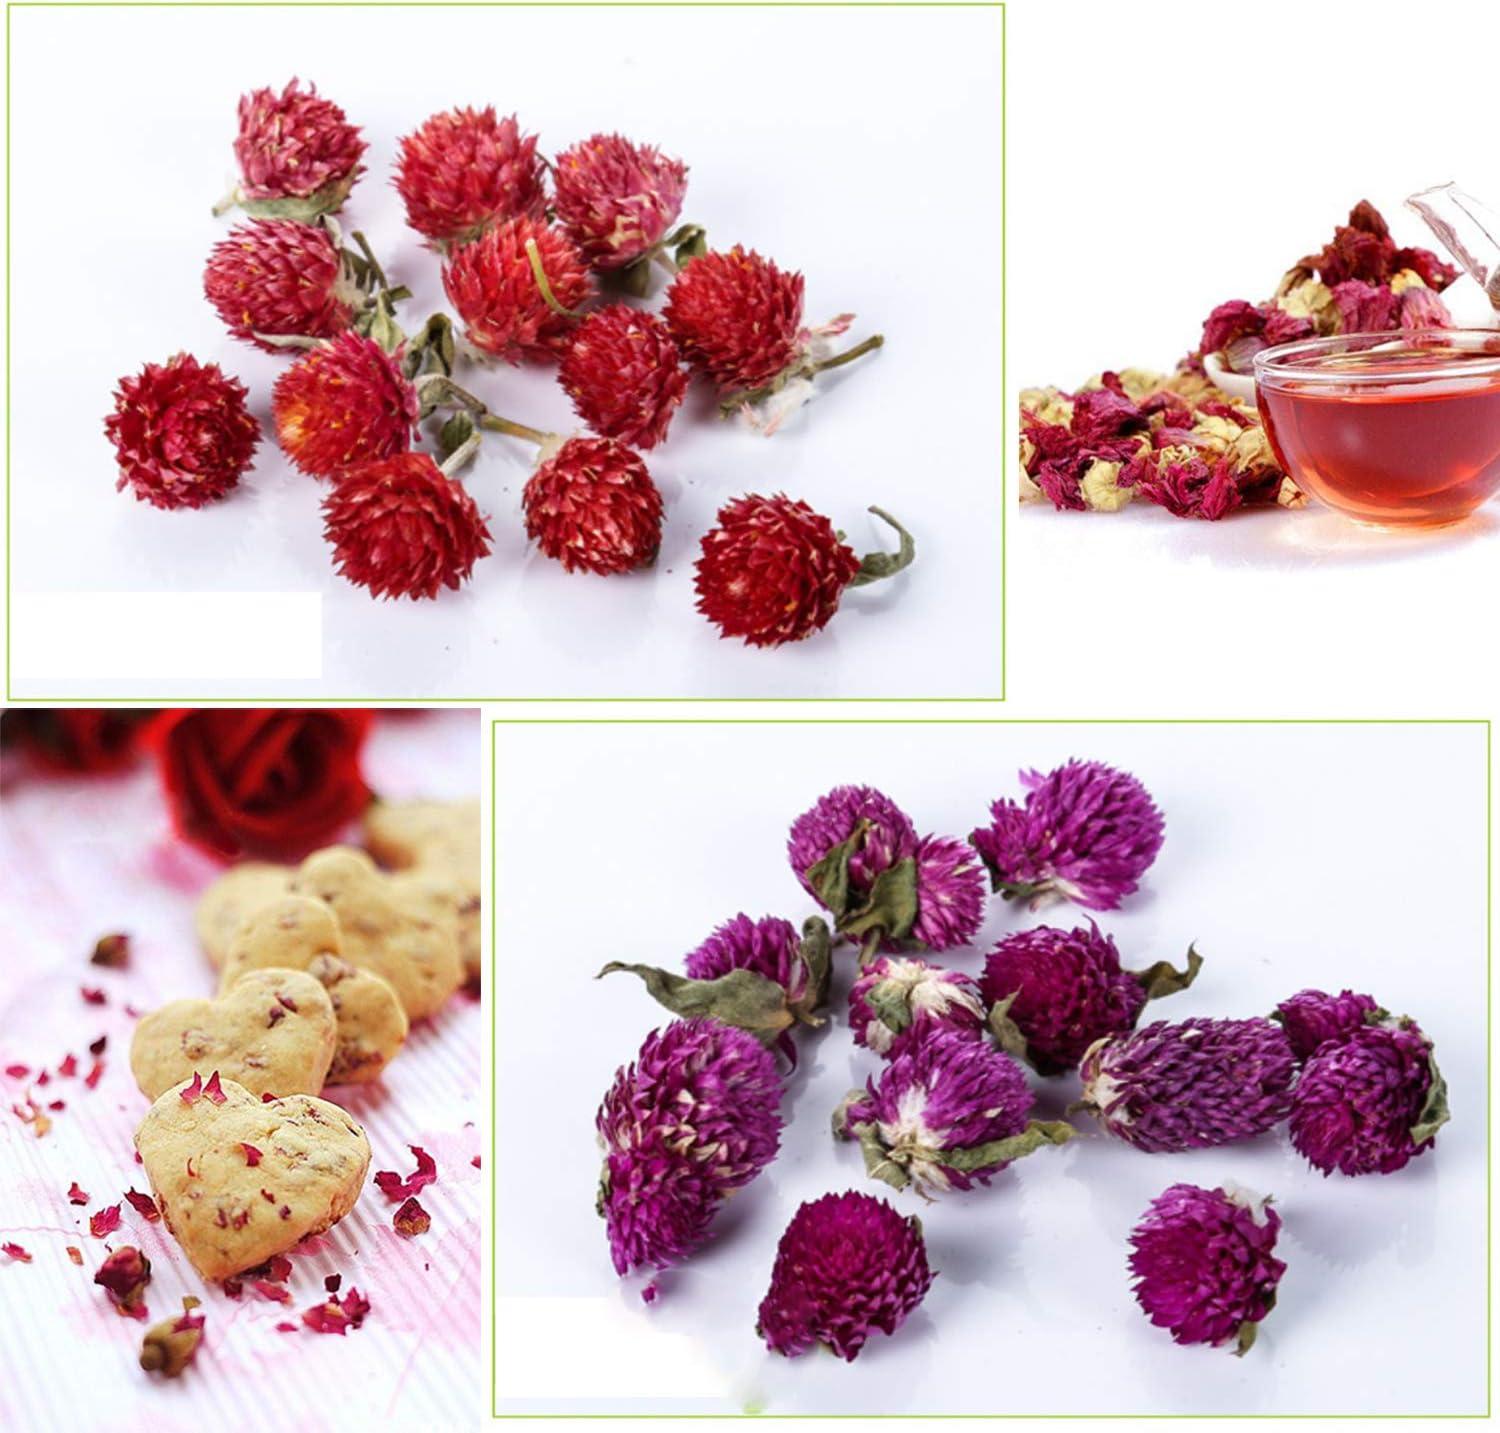 PEPPERLONELY Kosher Certified Botanical Dried Edible Flowers Lavender, Rose  Buds & Petals, Jasmine, Chamomile, Hop Flowers for Herb Tea, Soap Making